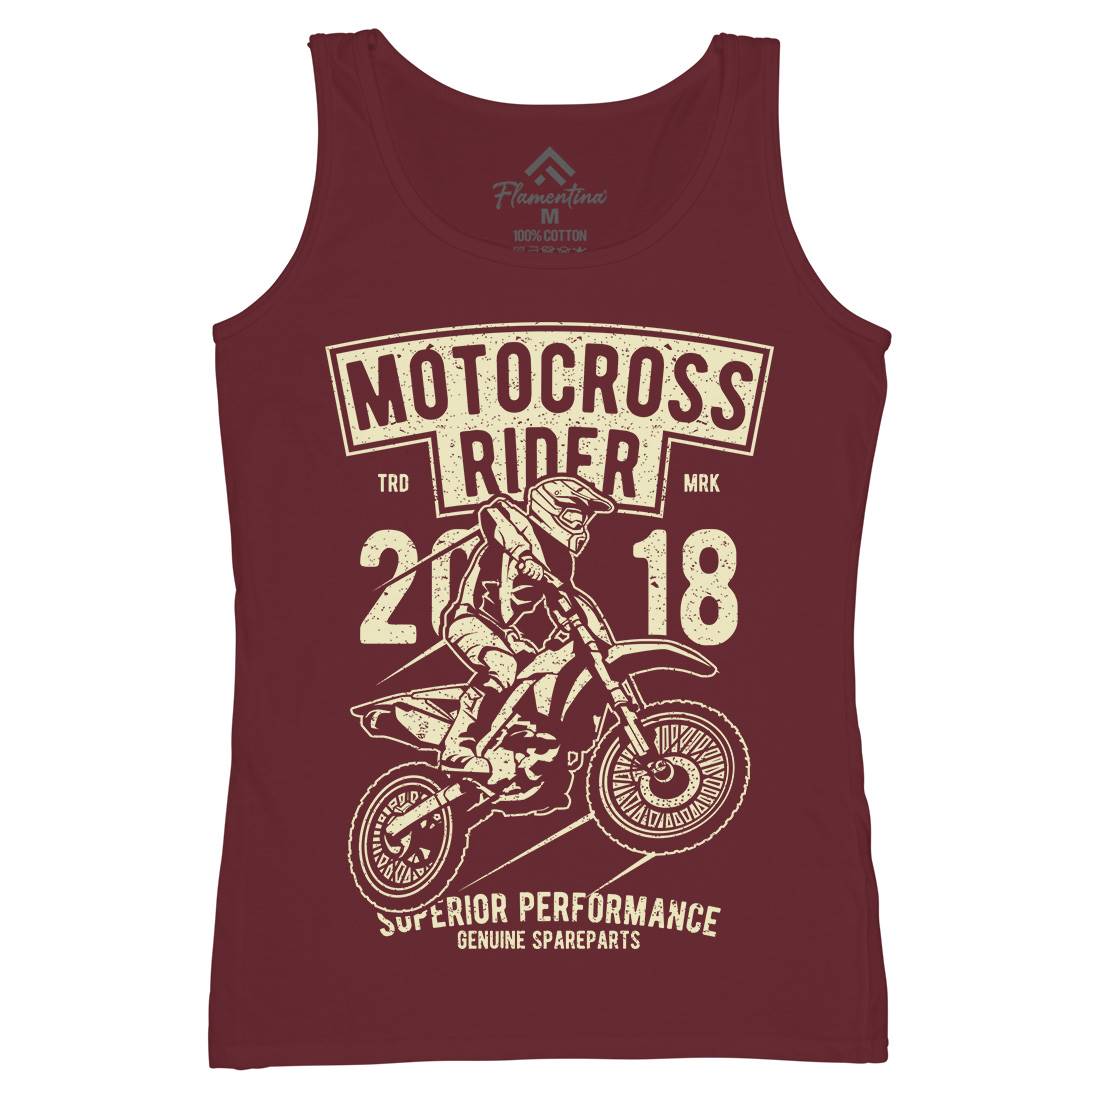 Motocross Rider Womens Organic Tank Top Vest Motorcycles A718